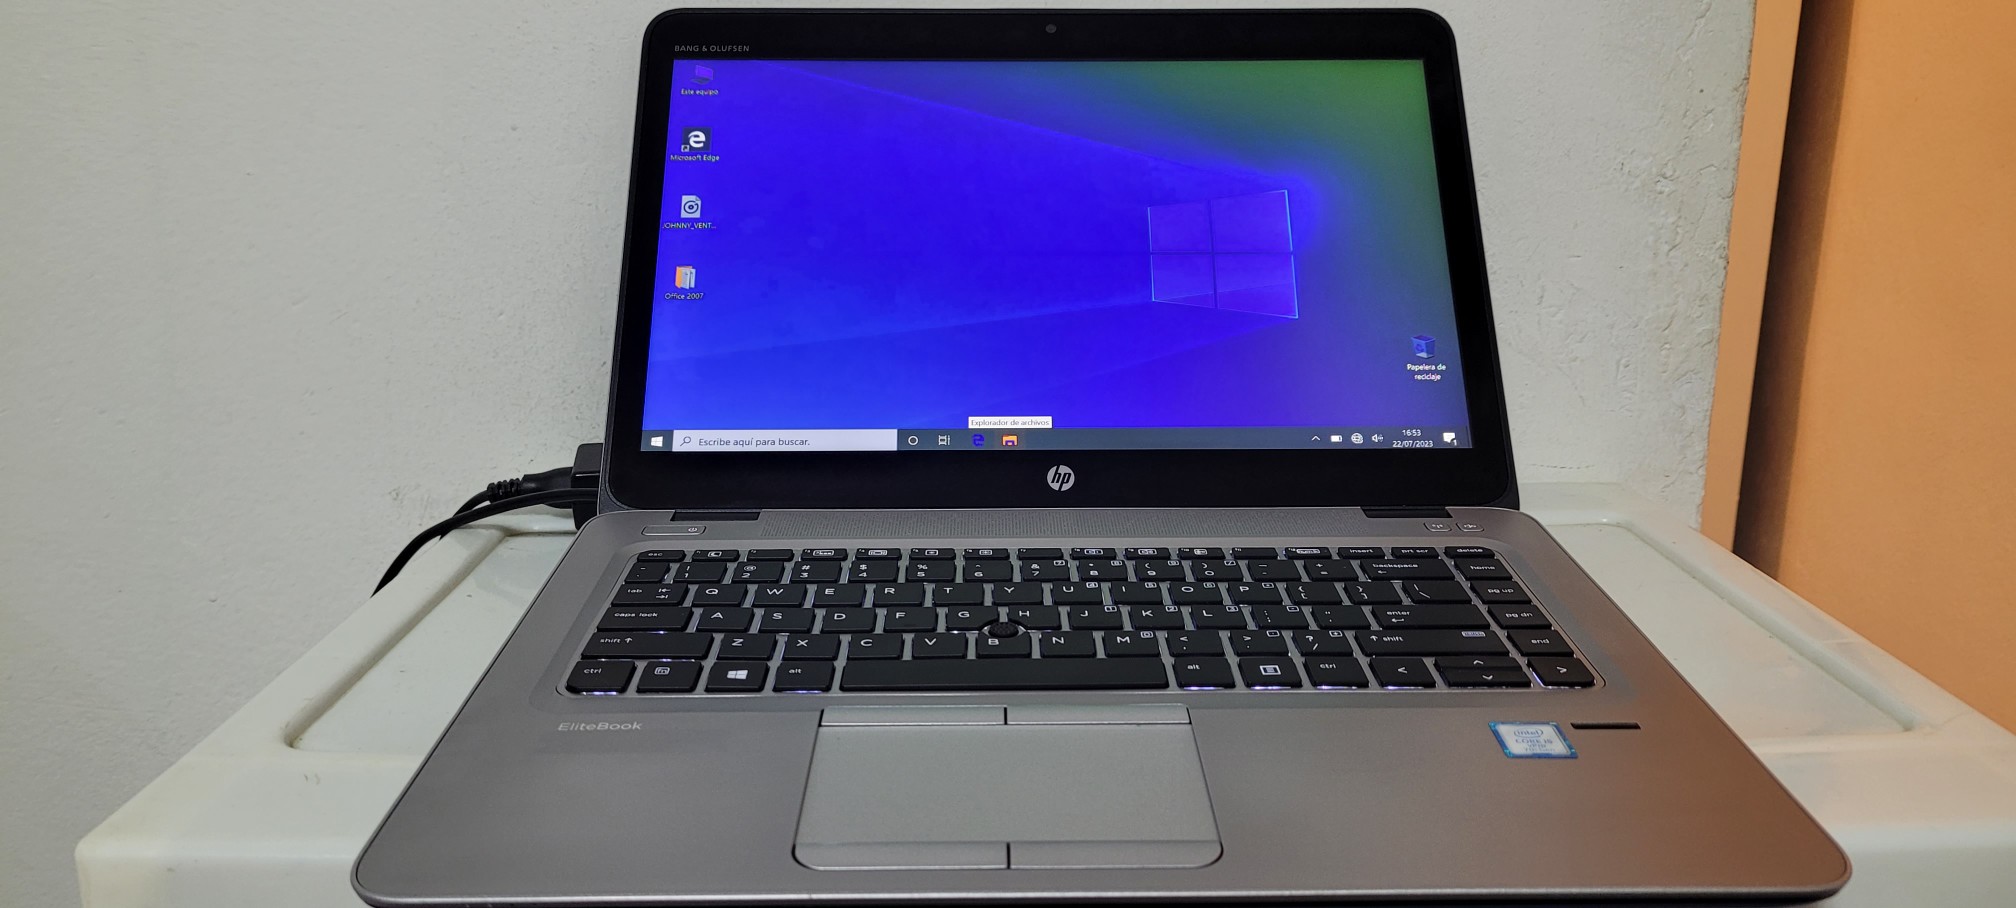 computadoras y laptops - Laptop hp Touch 14 Core i5 7ma Gen Ram 8gb ddr4 trae dos Disco duros Full